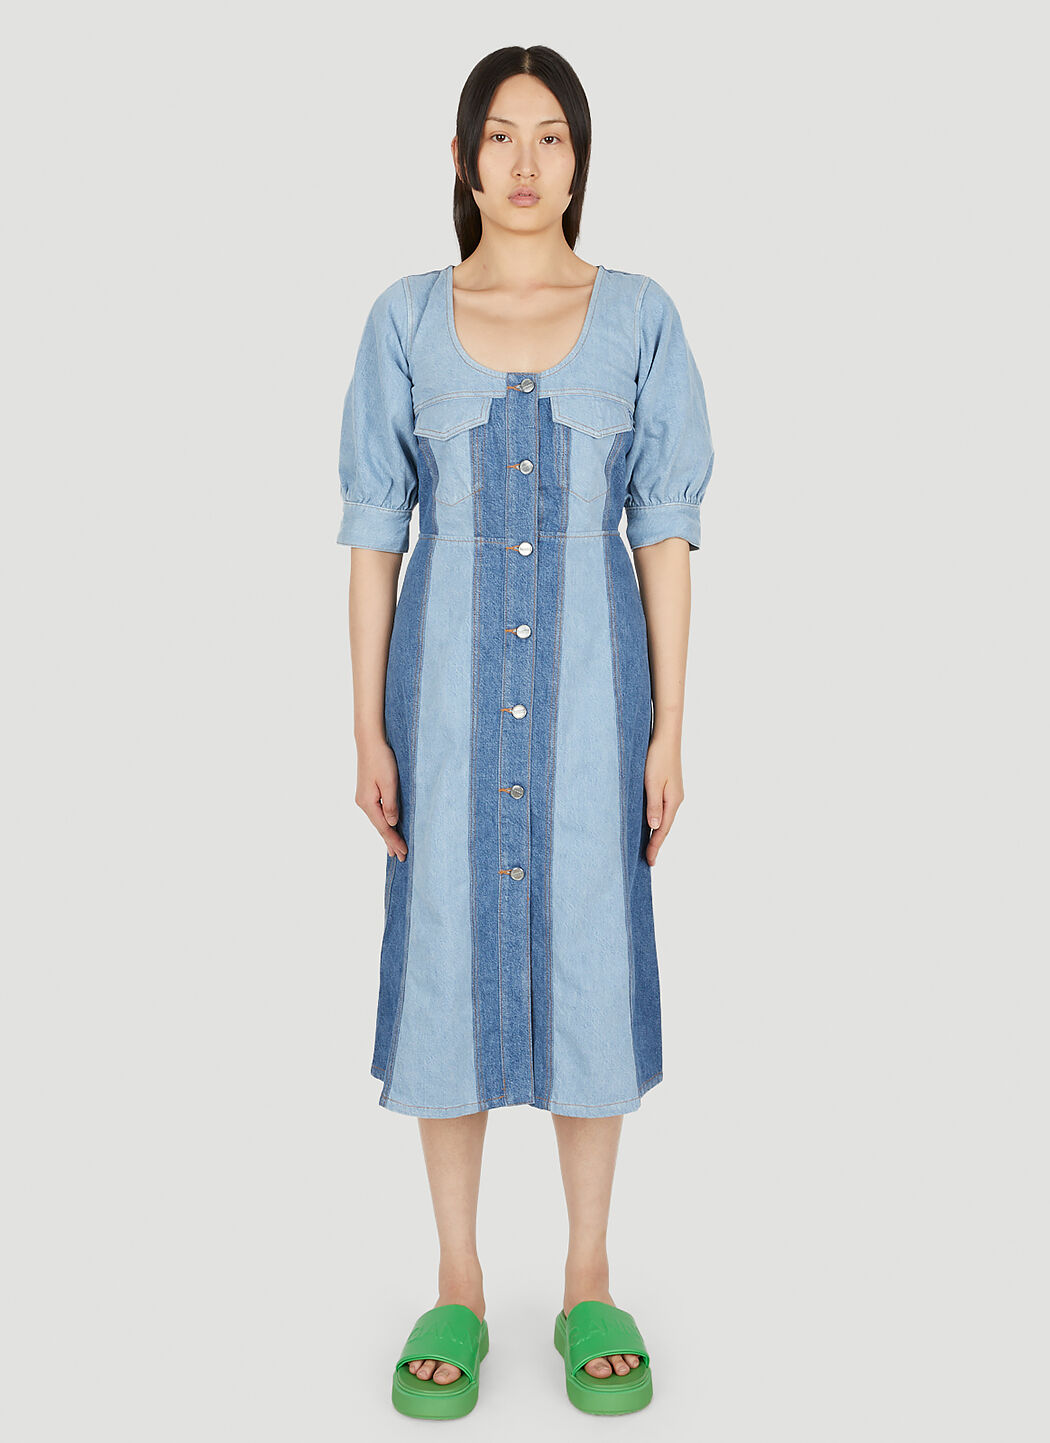 Vtg Susan Bristol Denim dress Dress Sz 12 Blue and red patchwork bottom |  eBay